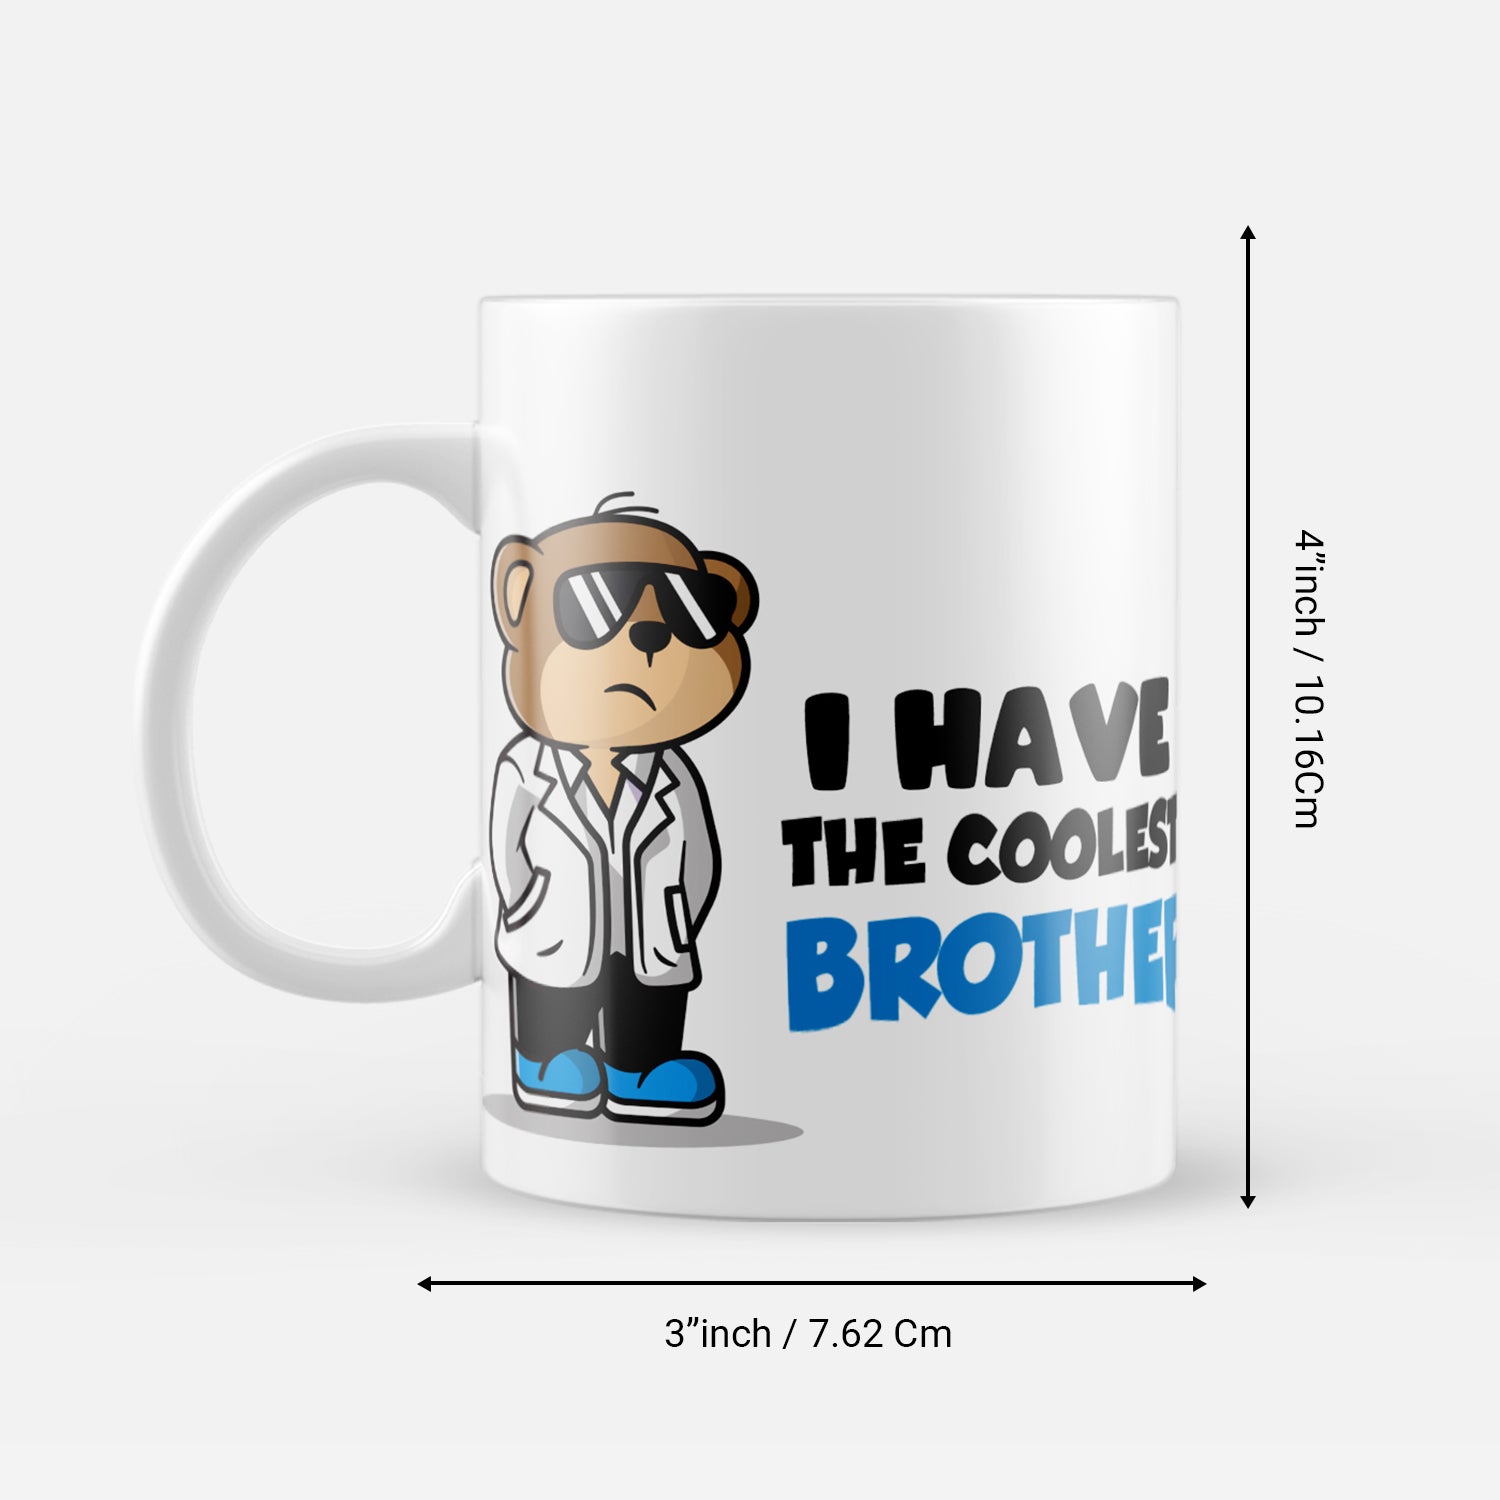 "I have Coolest Brother" Ceramic Coffee/Tea Mug 3